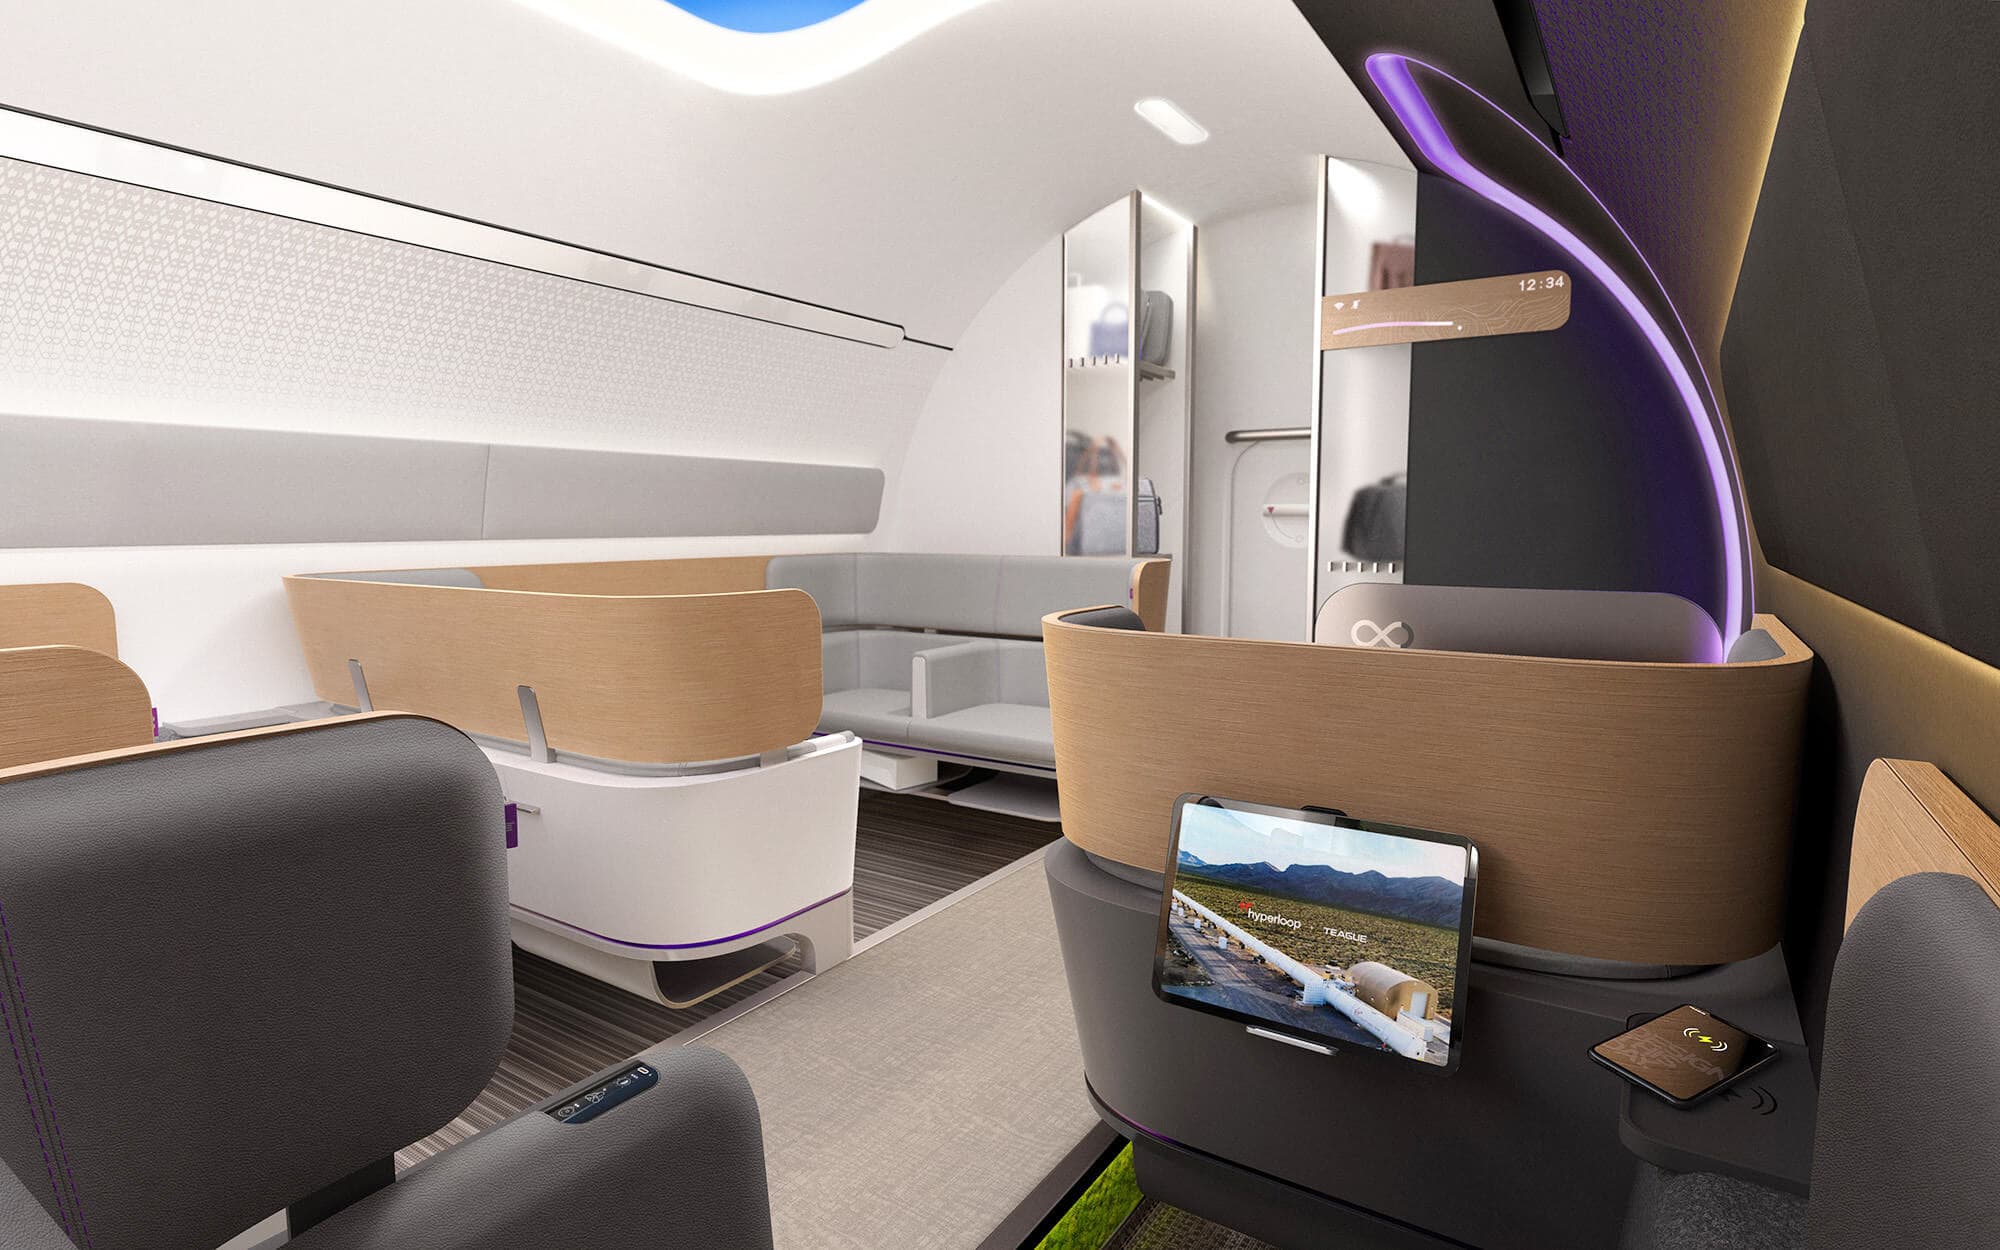 Virgin Hyperloop interior with skylight at purple accents